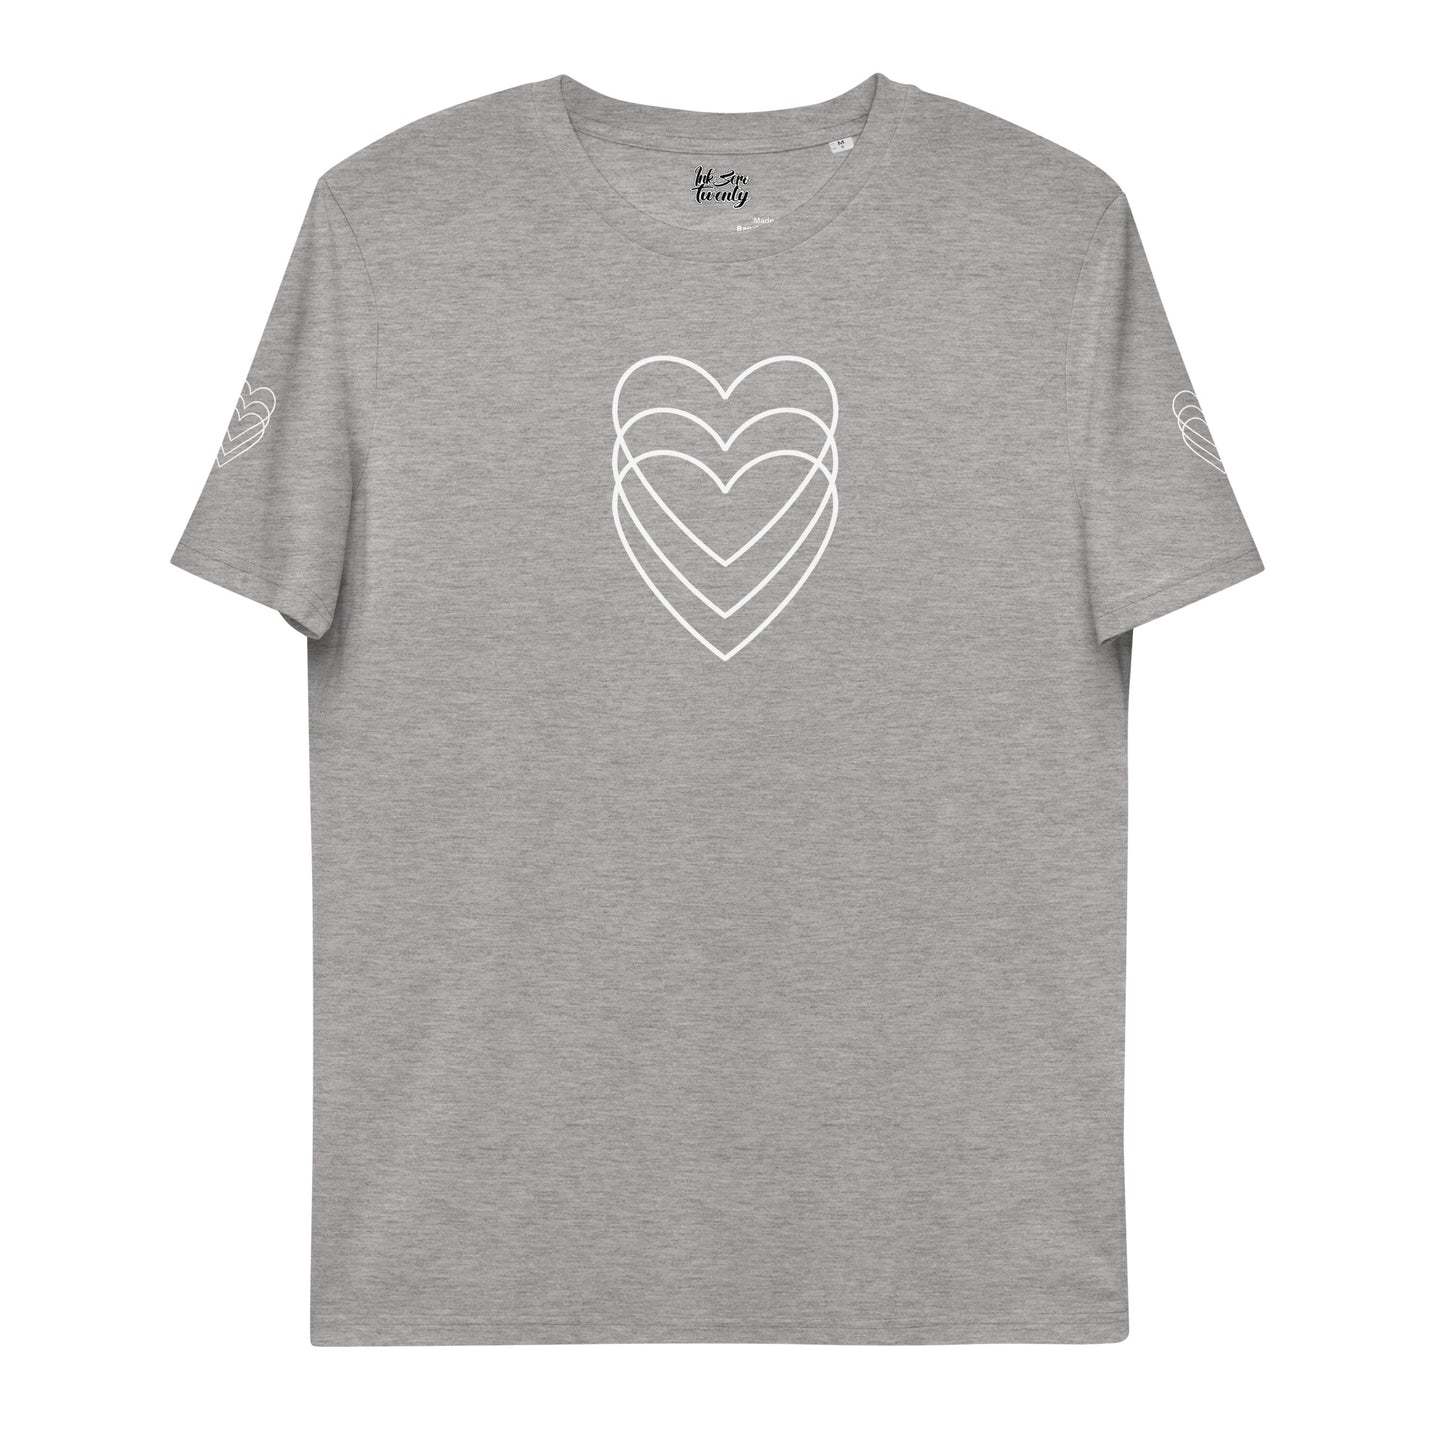 Unisex organic cotton t-shirt white hearts tattoo print